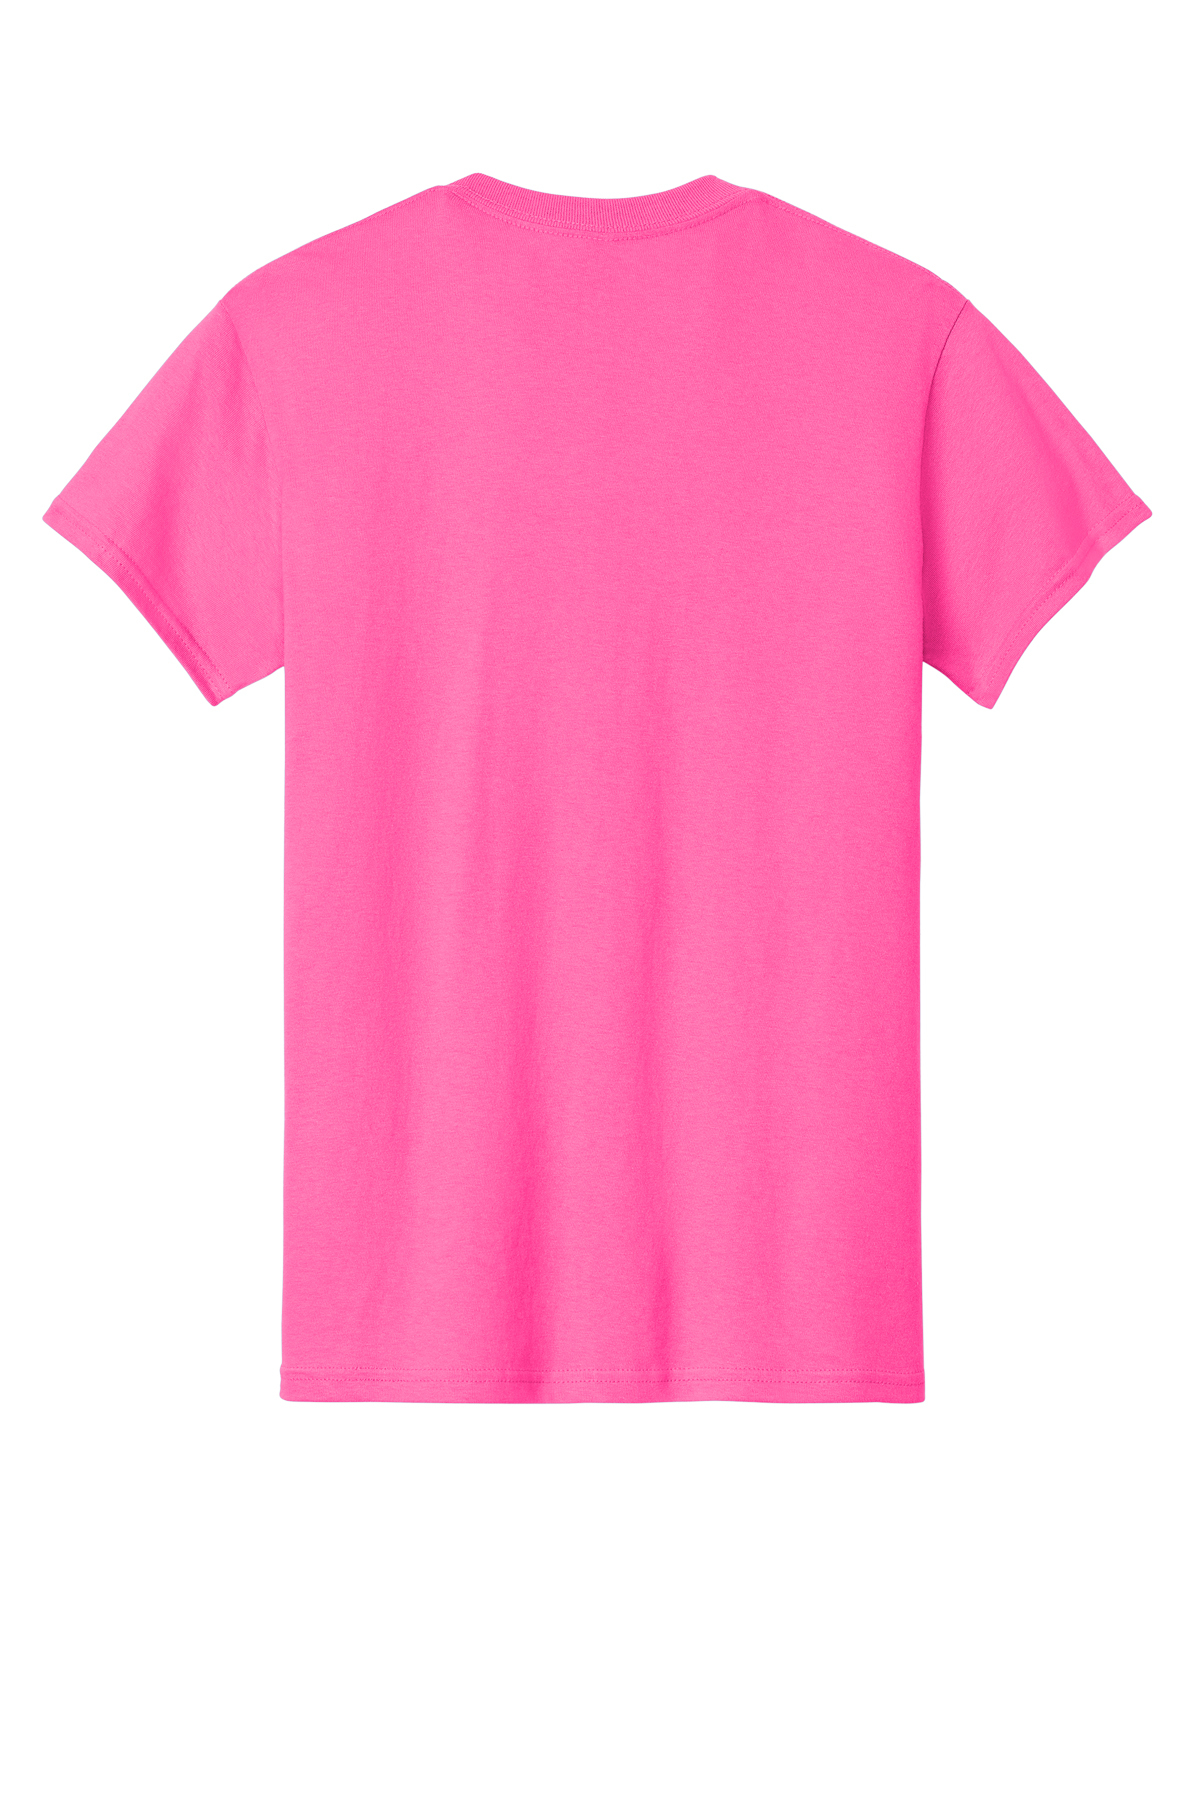 Gildan 65% Polyester/35% Cotton Shirt Pink / Small